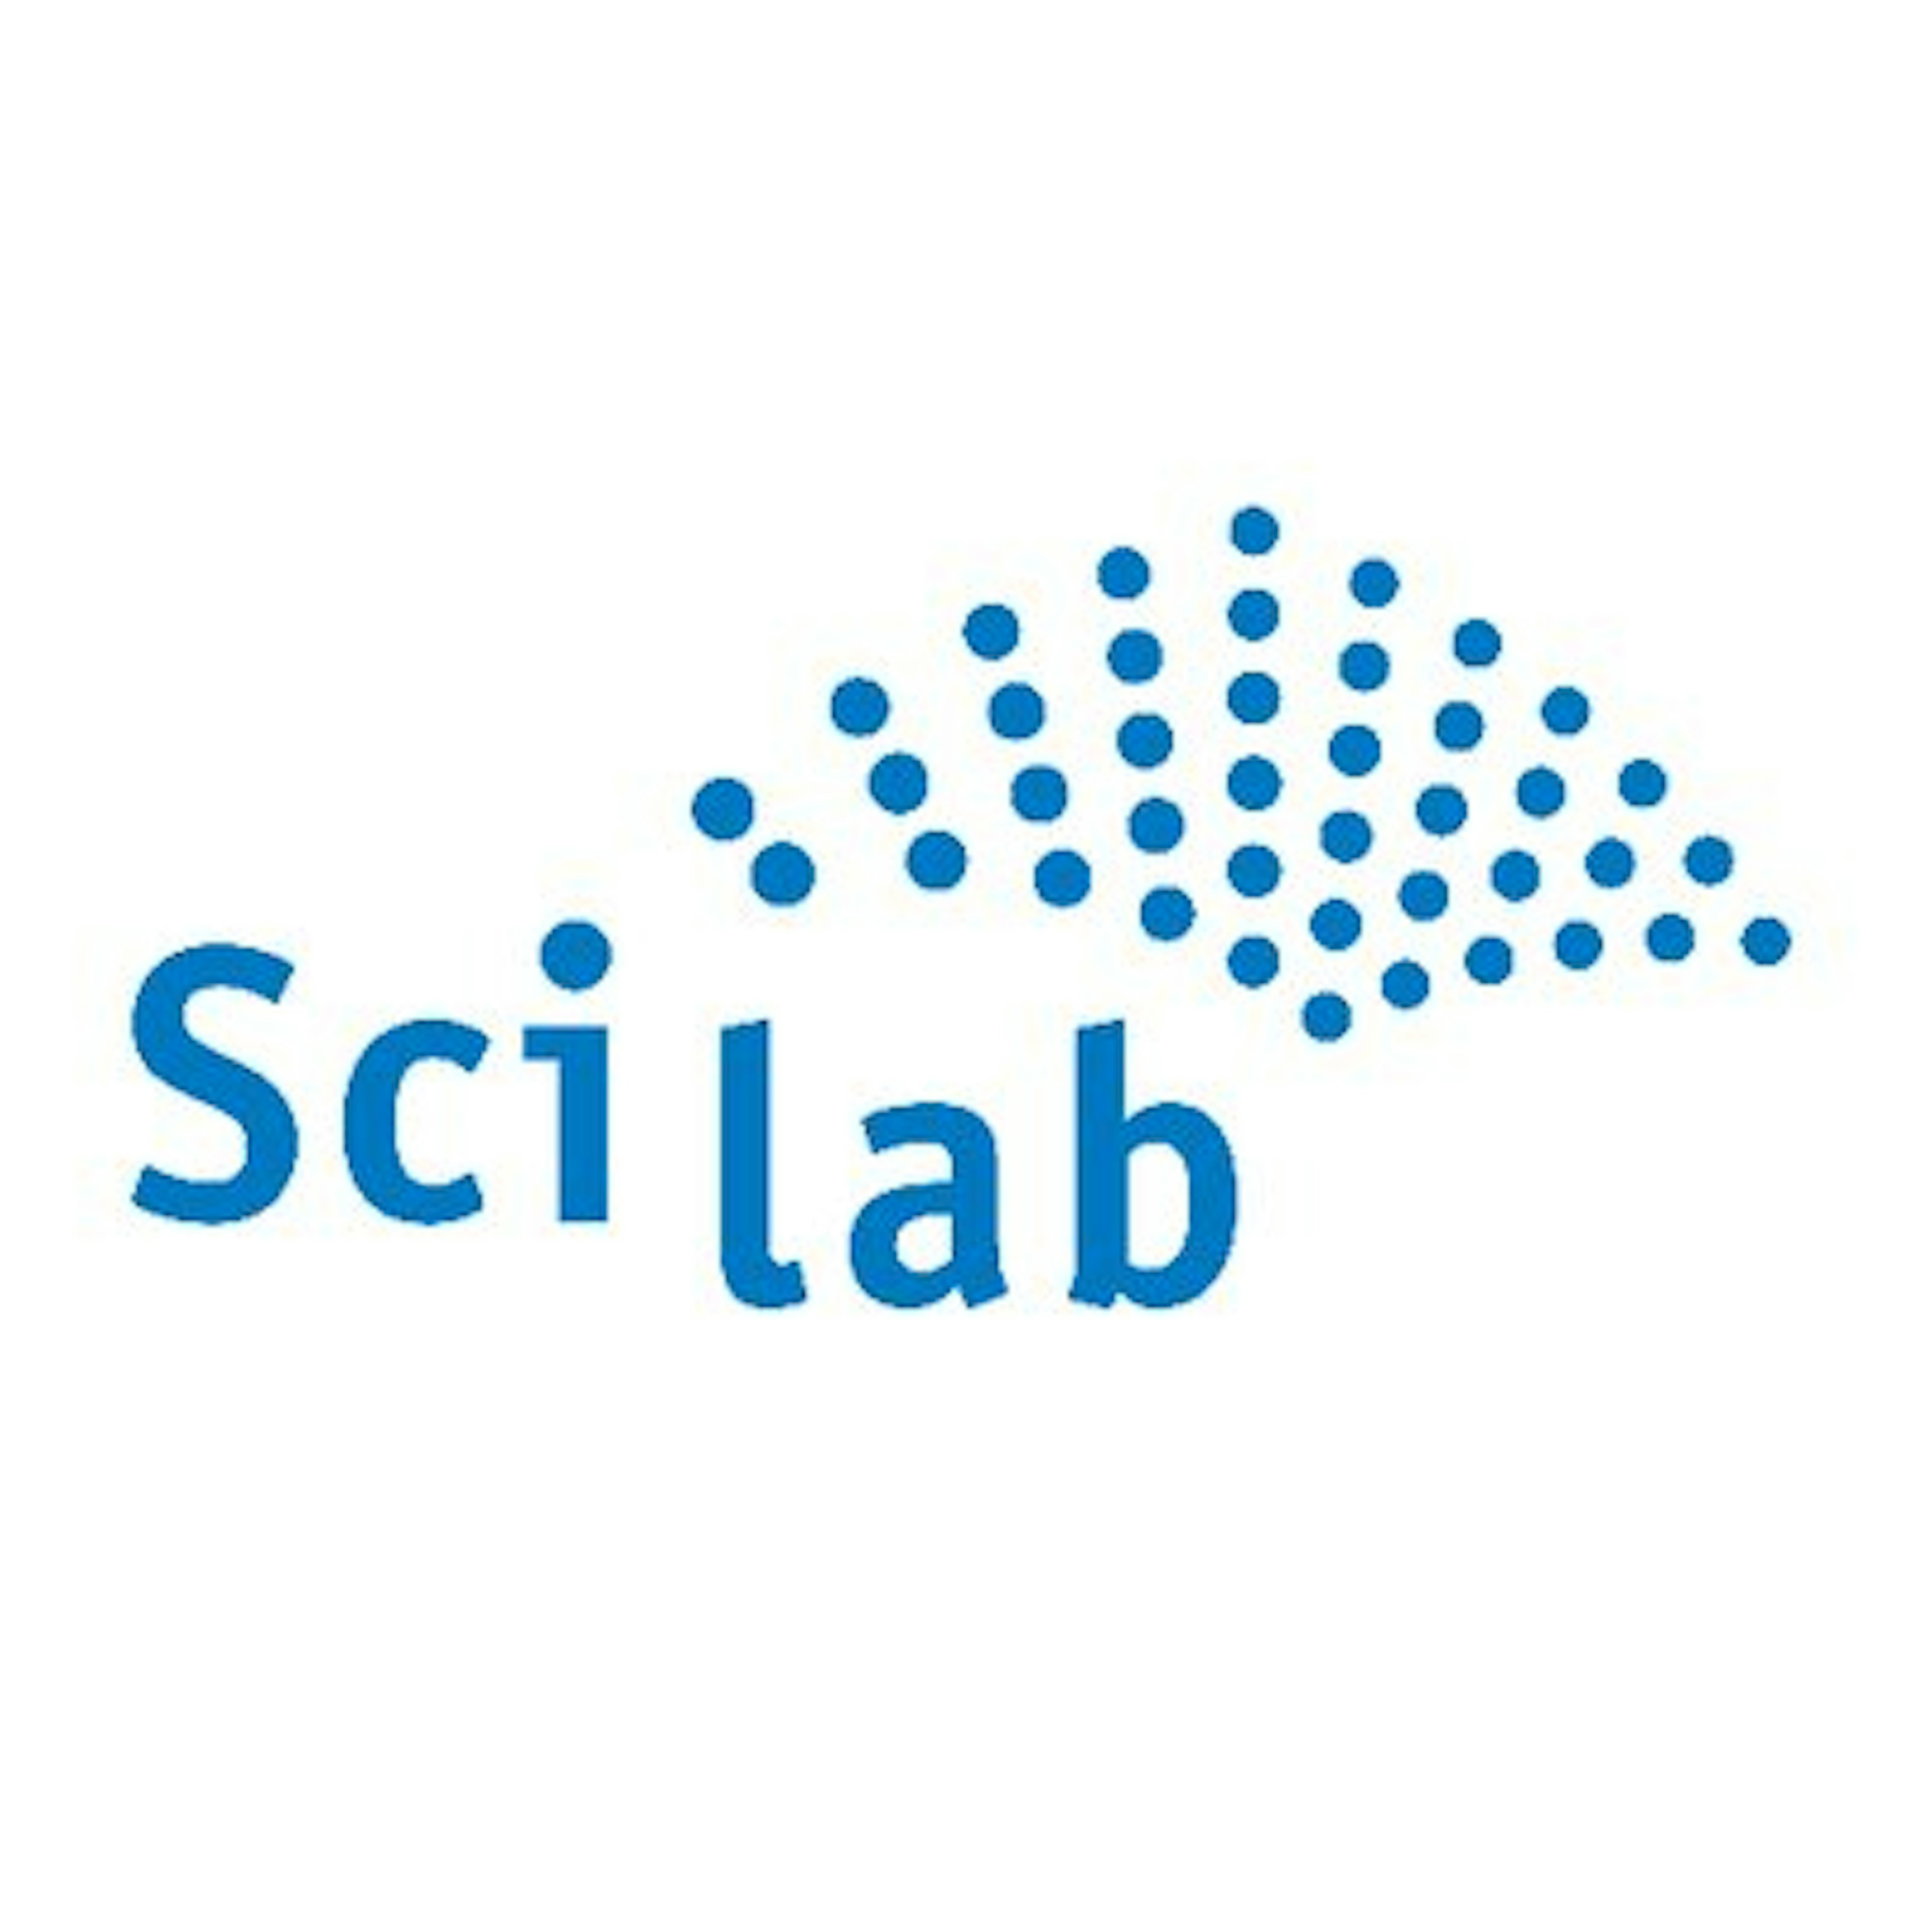 Scilab Logo